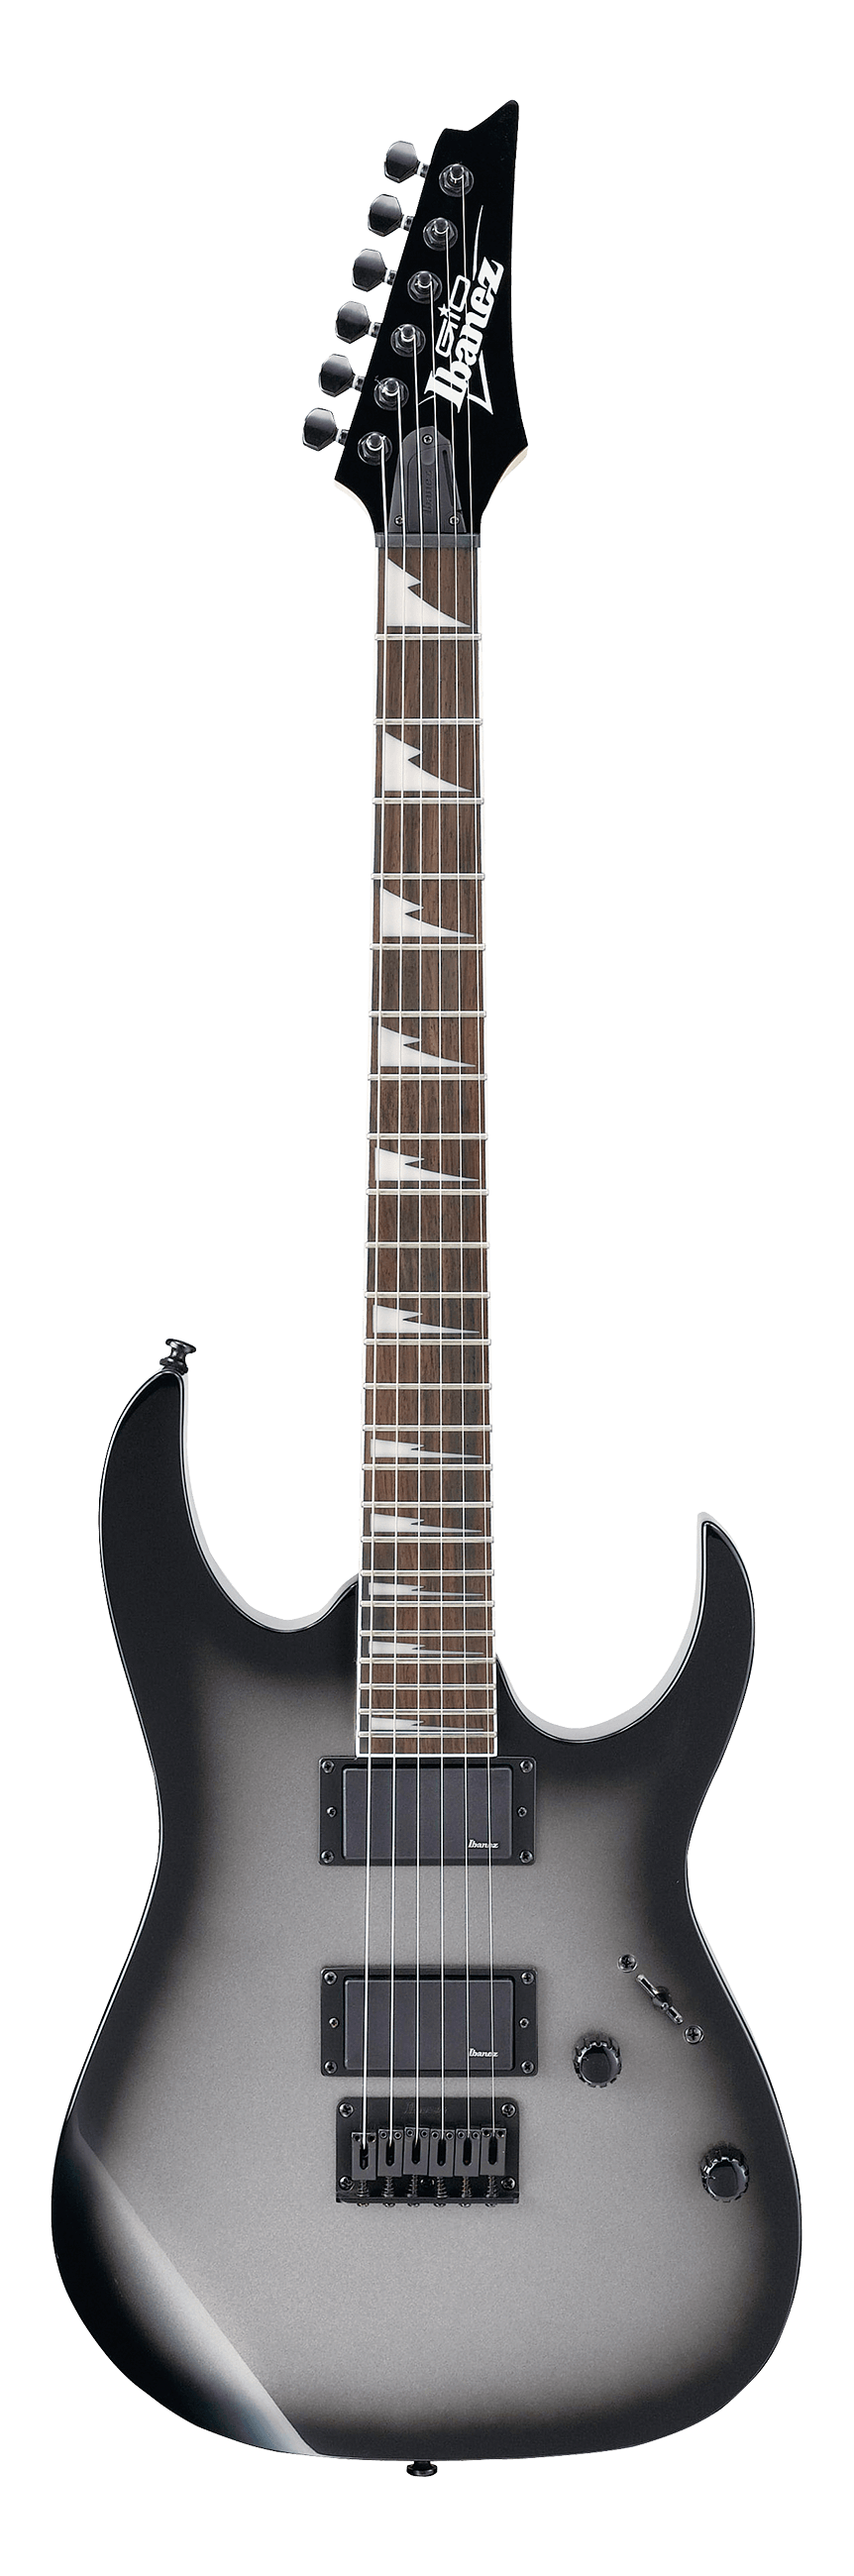 Ibanez GRG Series Electric Guitar in Metallic Gray Sunburst